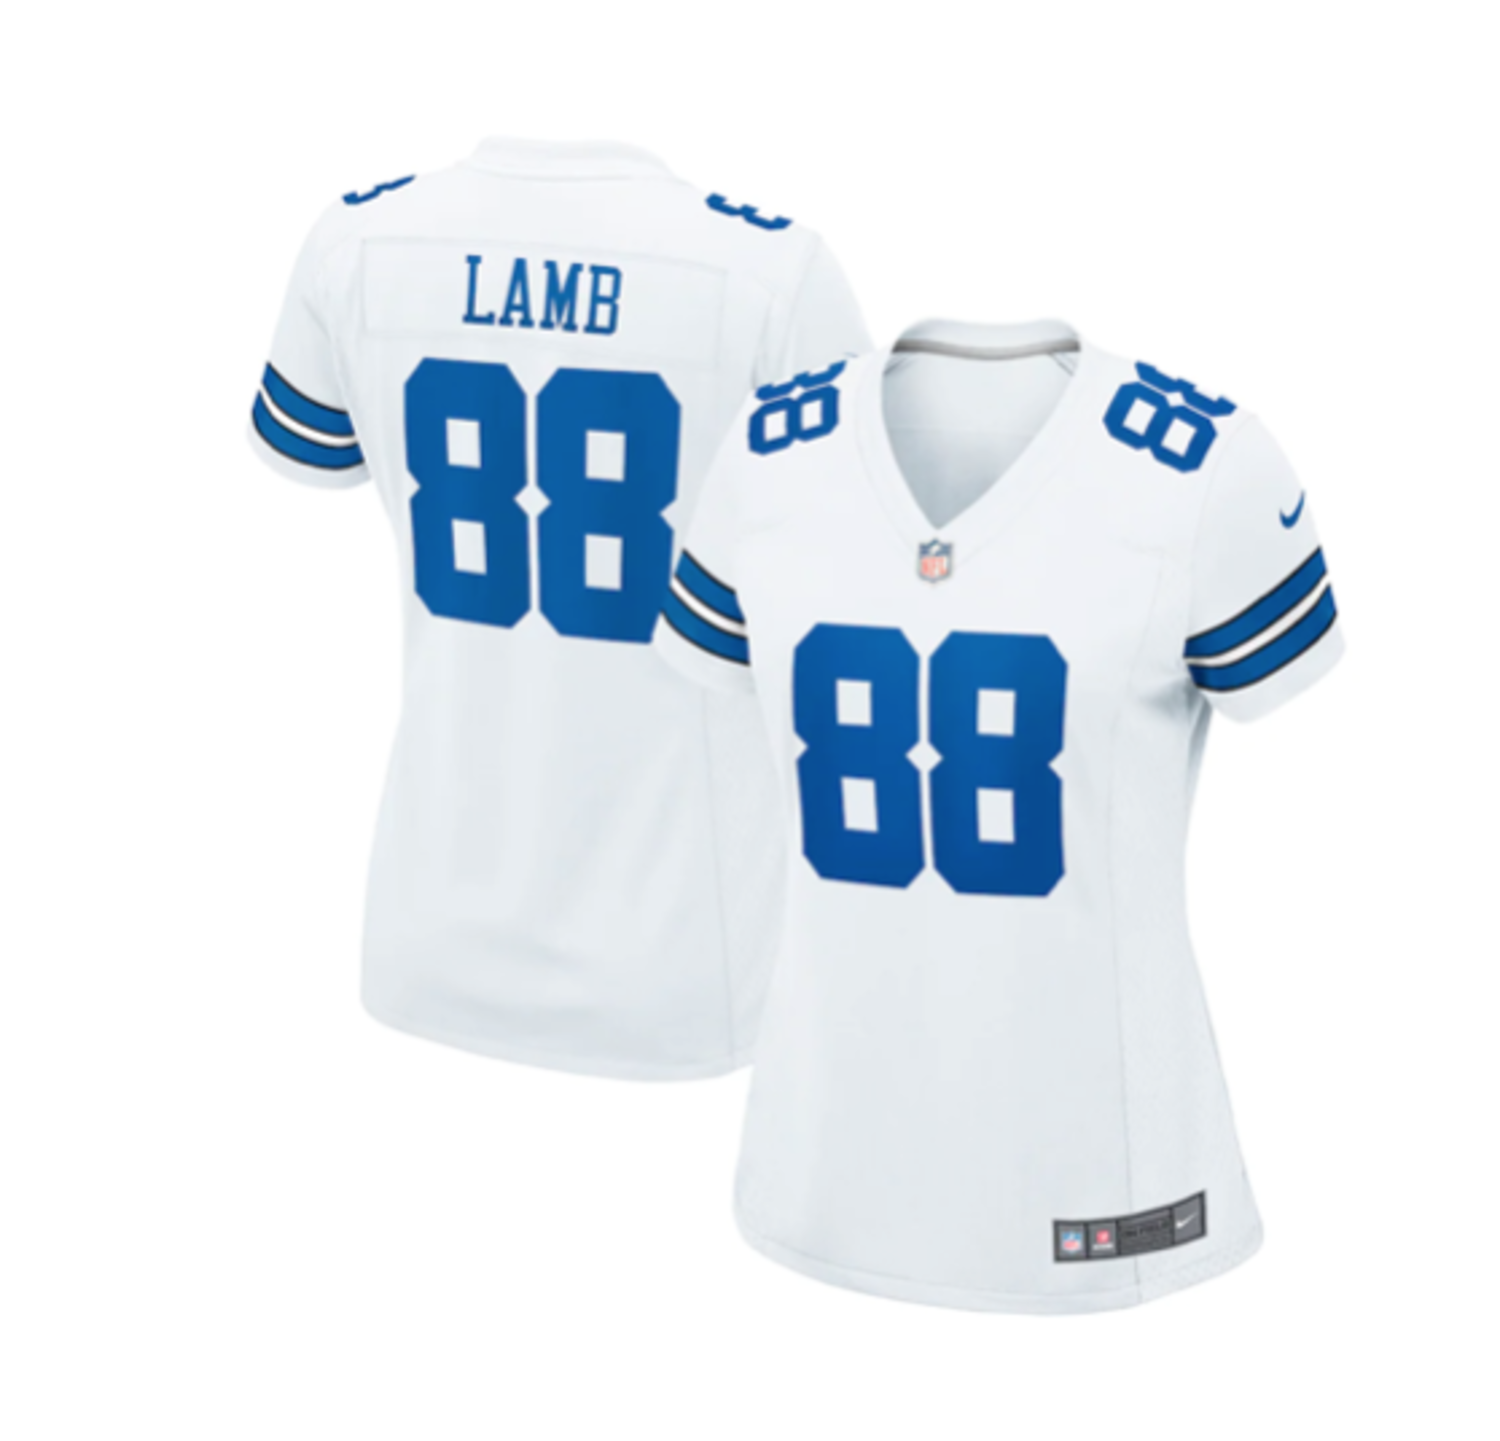 Nike NFL Dallas Cowboys Women's Nike CeeDee Lamb #88 Game Jersey White